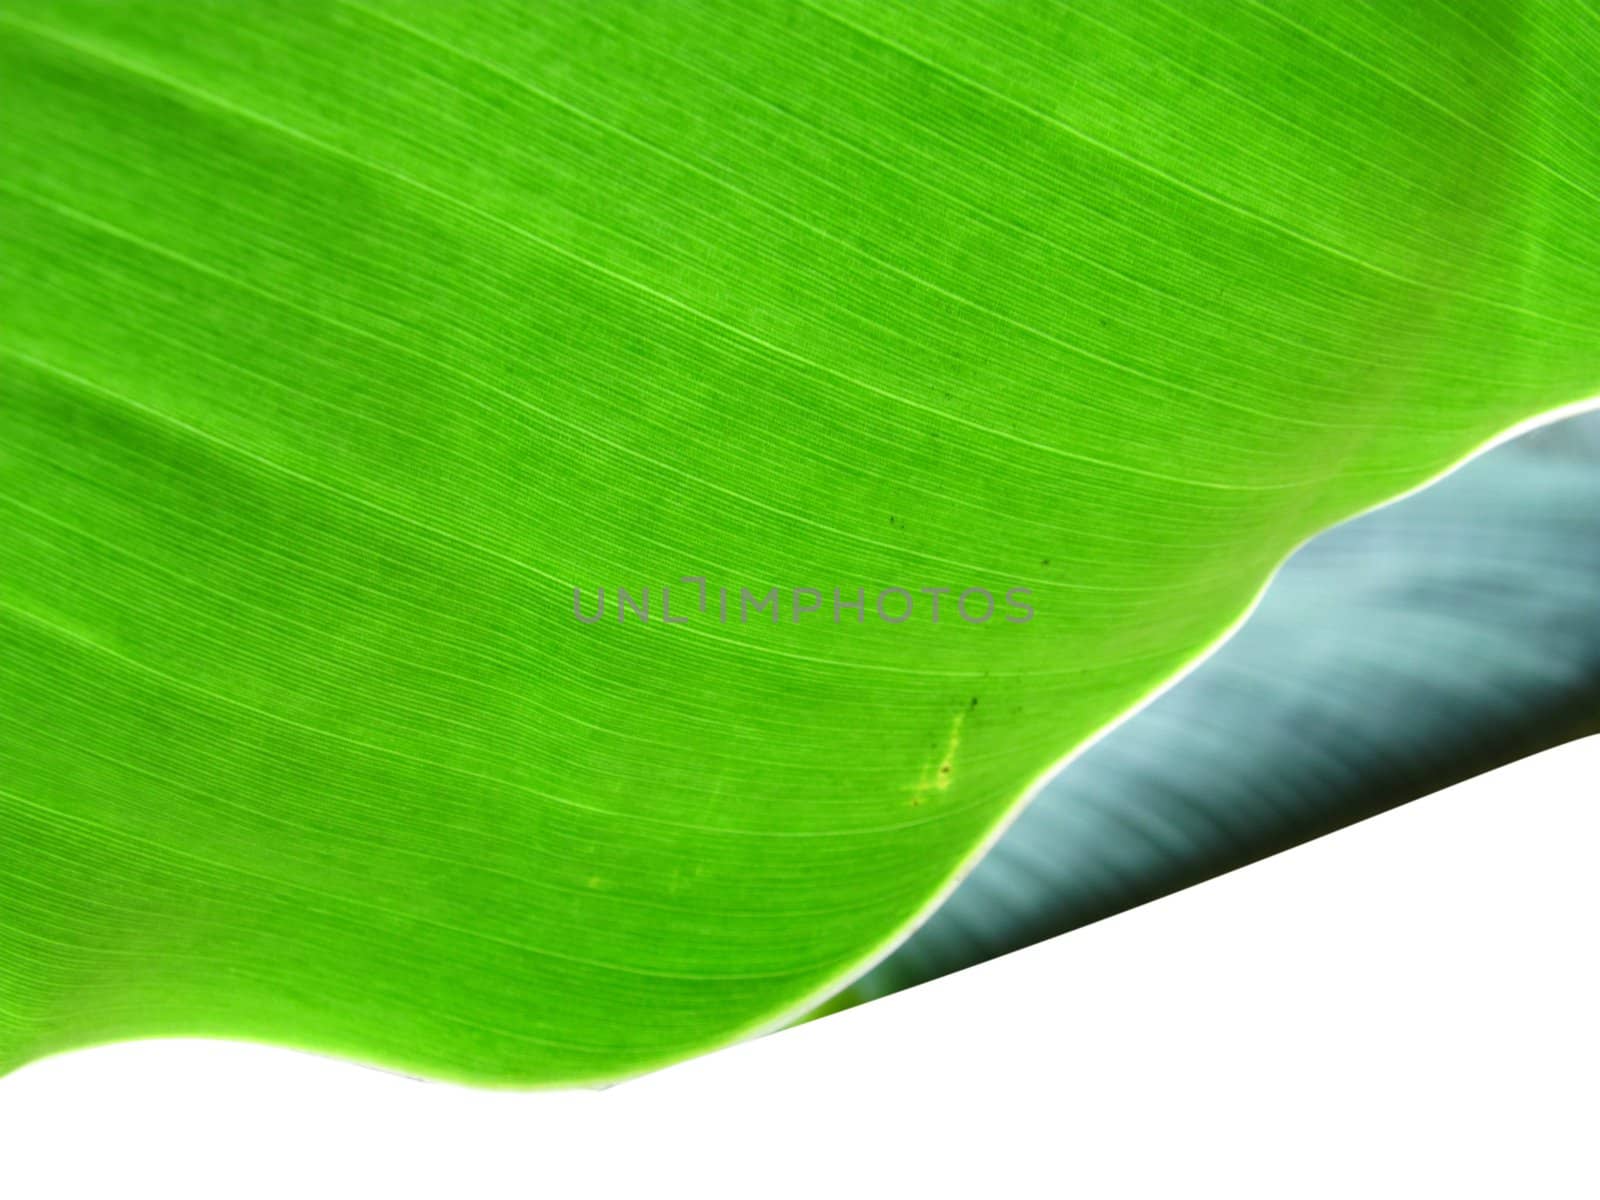 banna leaf texture by lkant